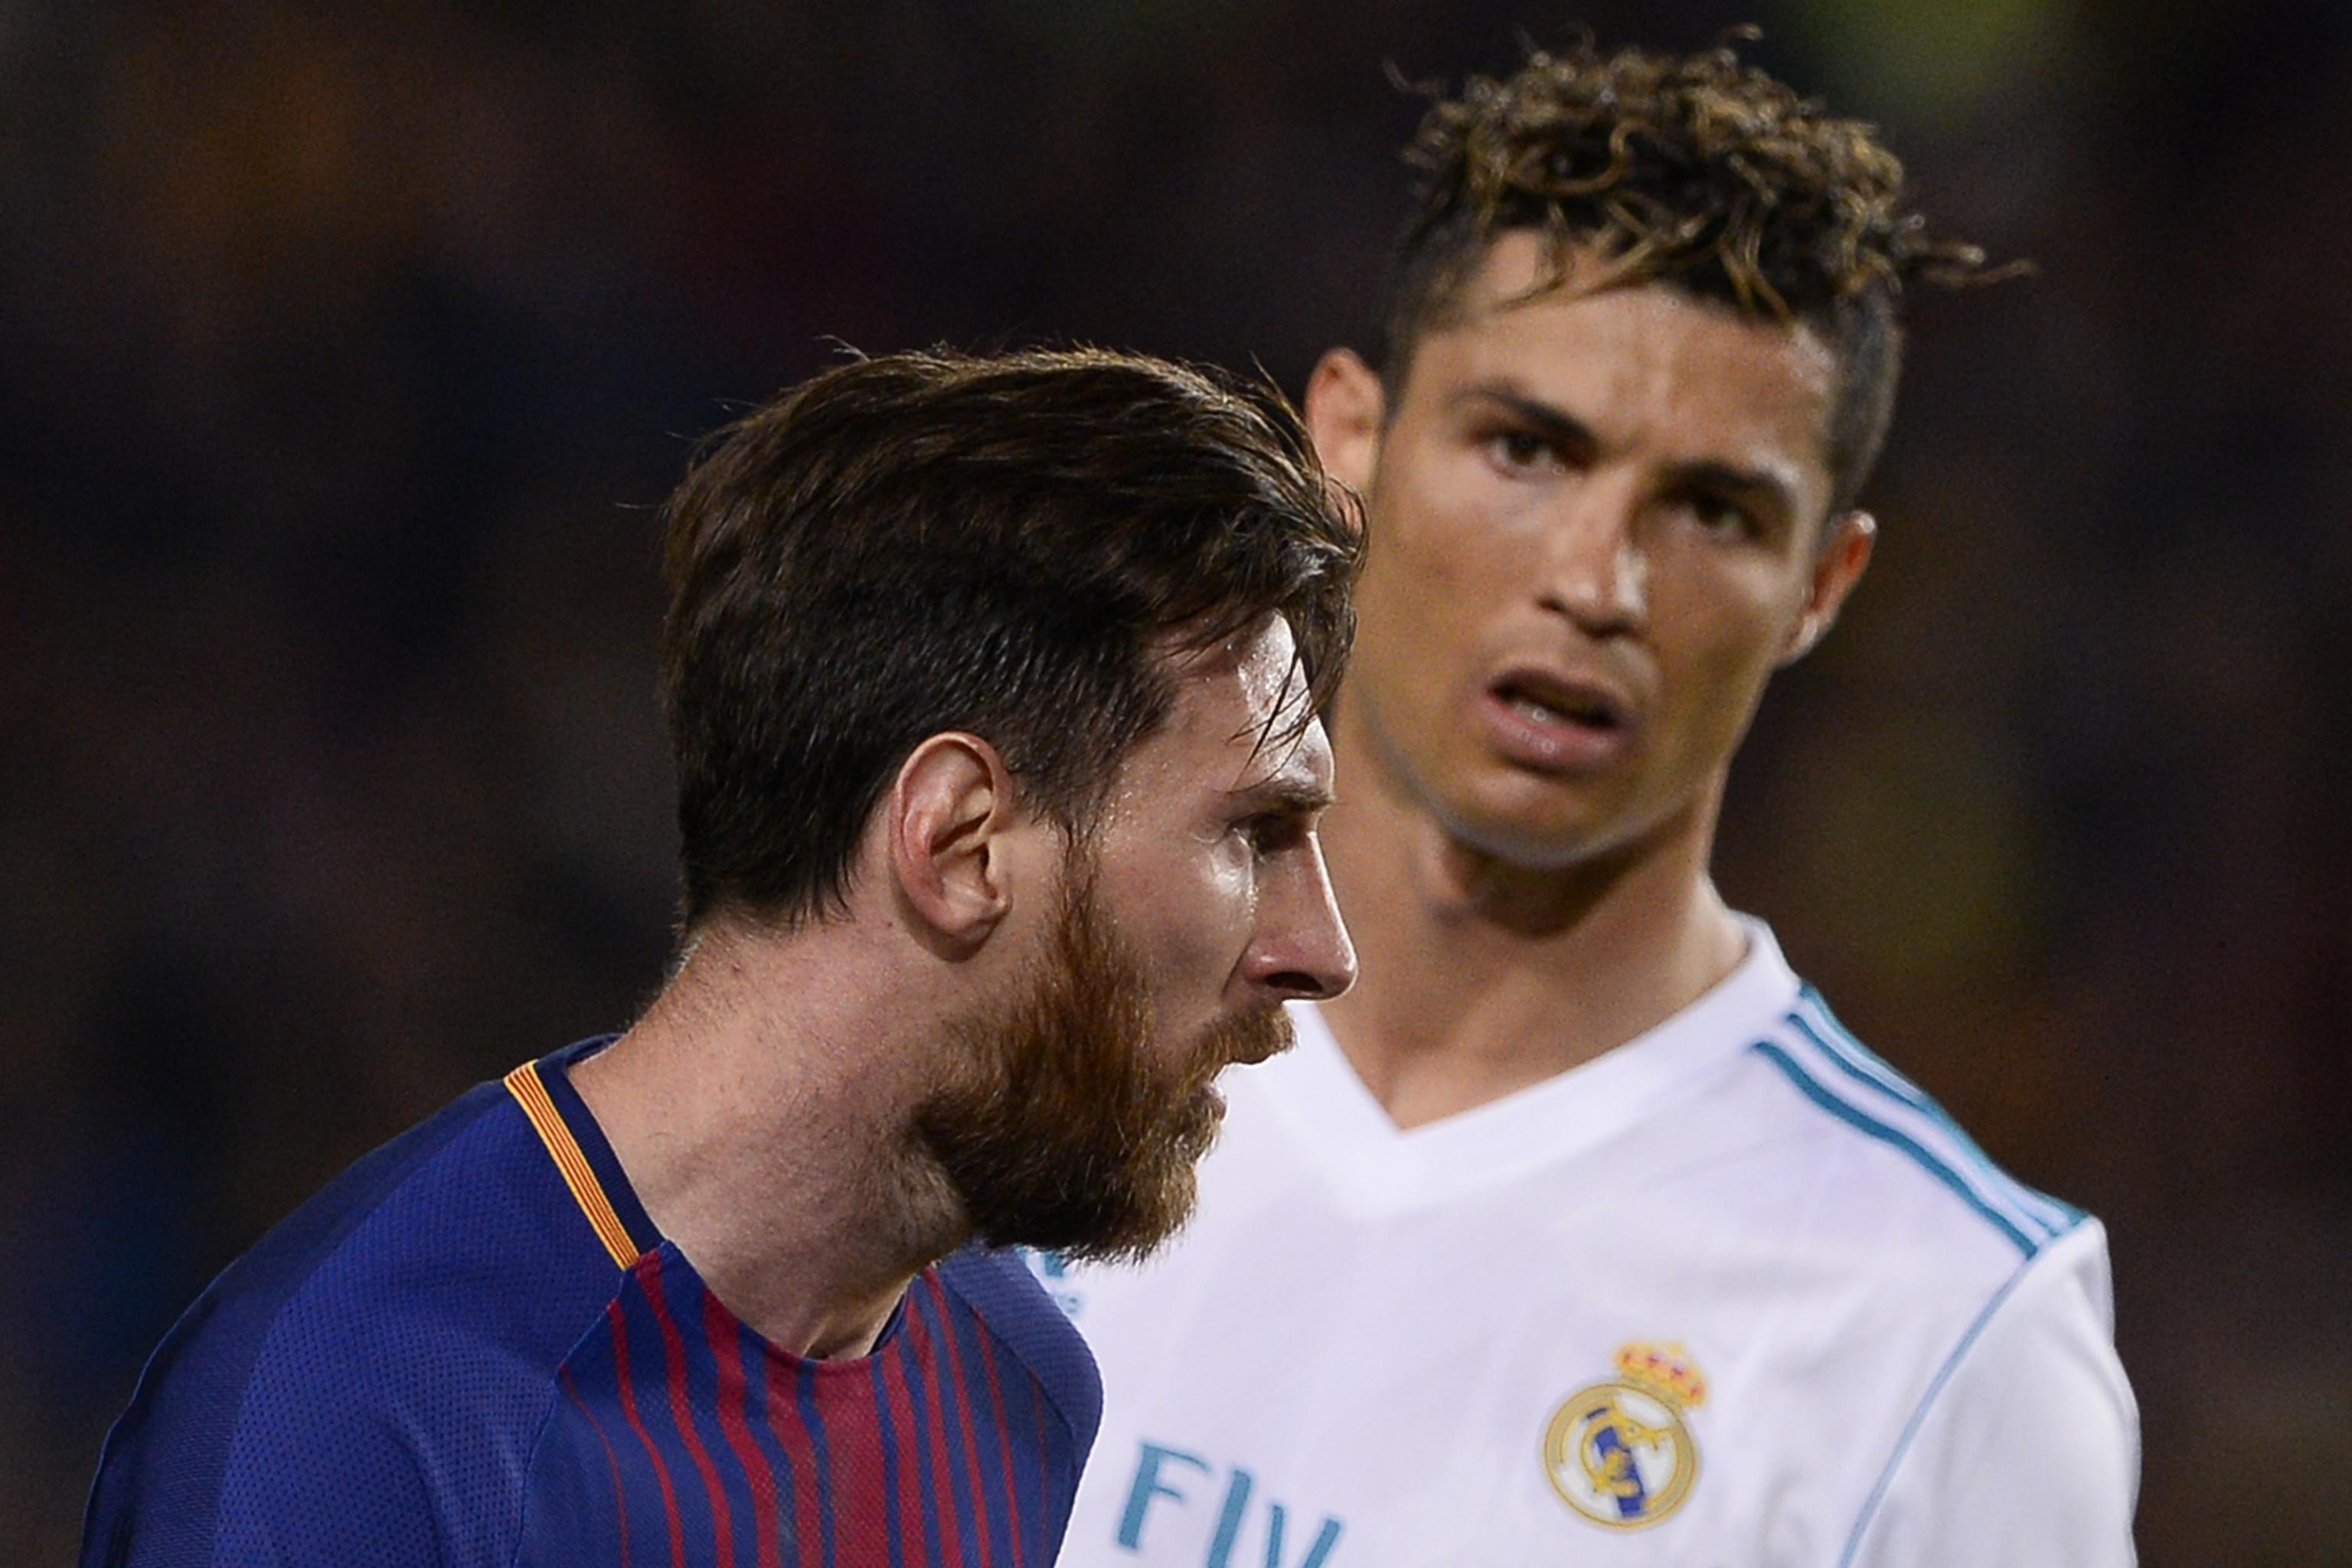 Eurosport - Lionel Messi and Cristiano Ronaldo's now